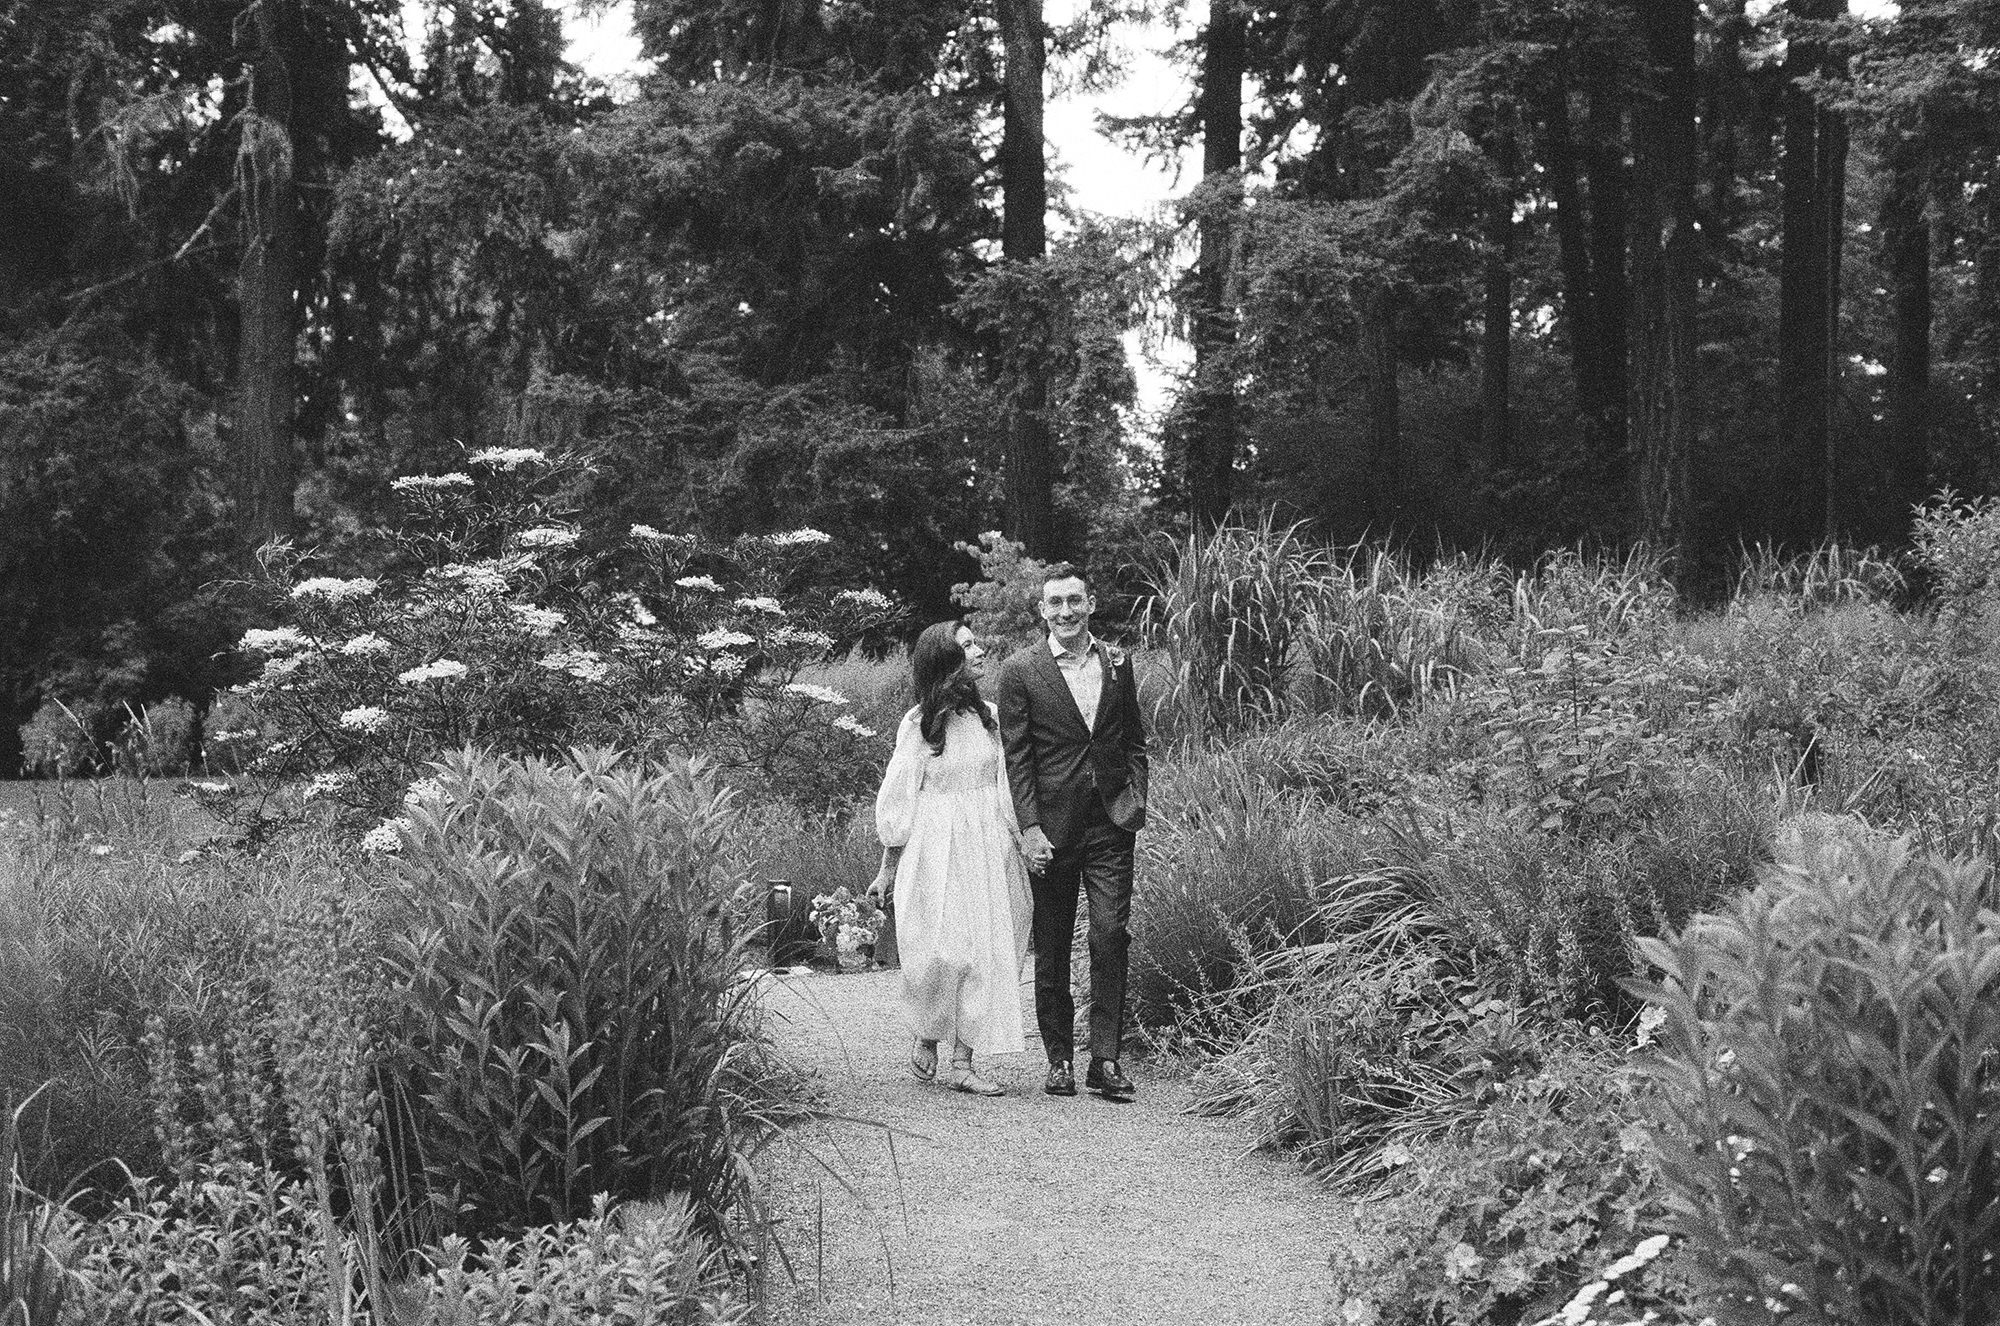 Portland wedding photographer captures a black and white film photograph of a bride and groom walking through Leach Botanical Garden